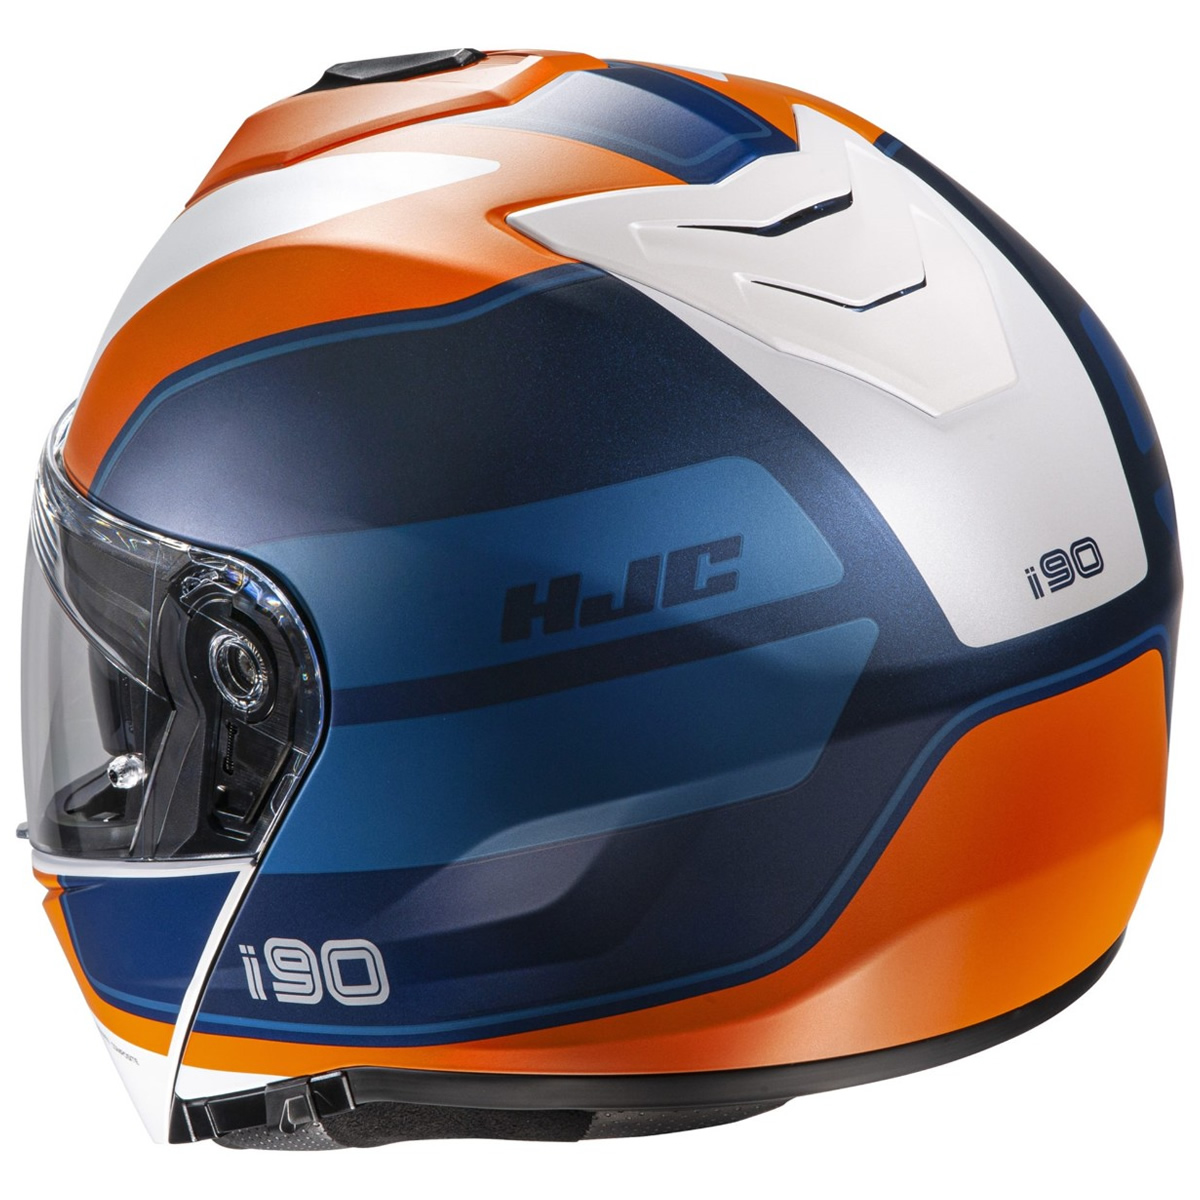 HJC Helm i90 Wasco MC27SF, weiß-blau-orange matt